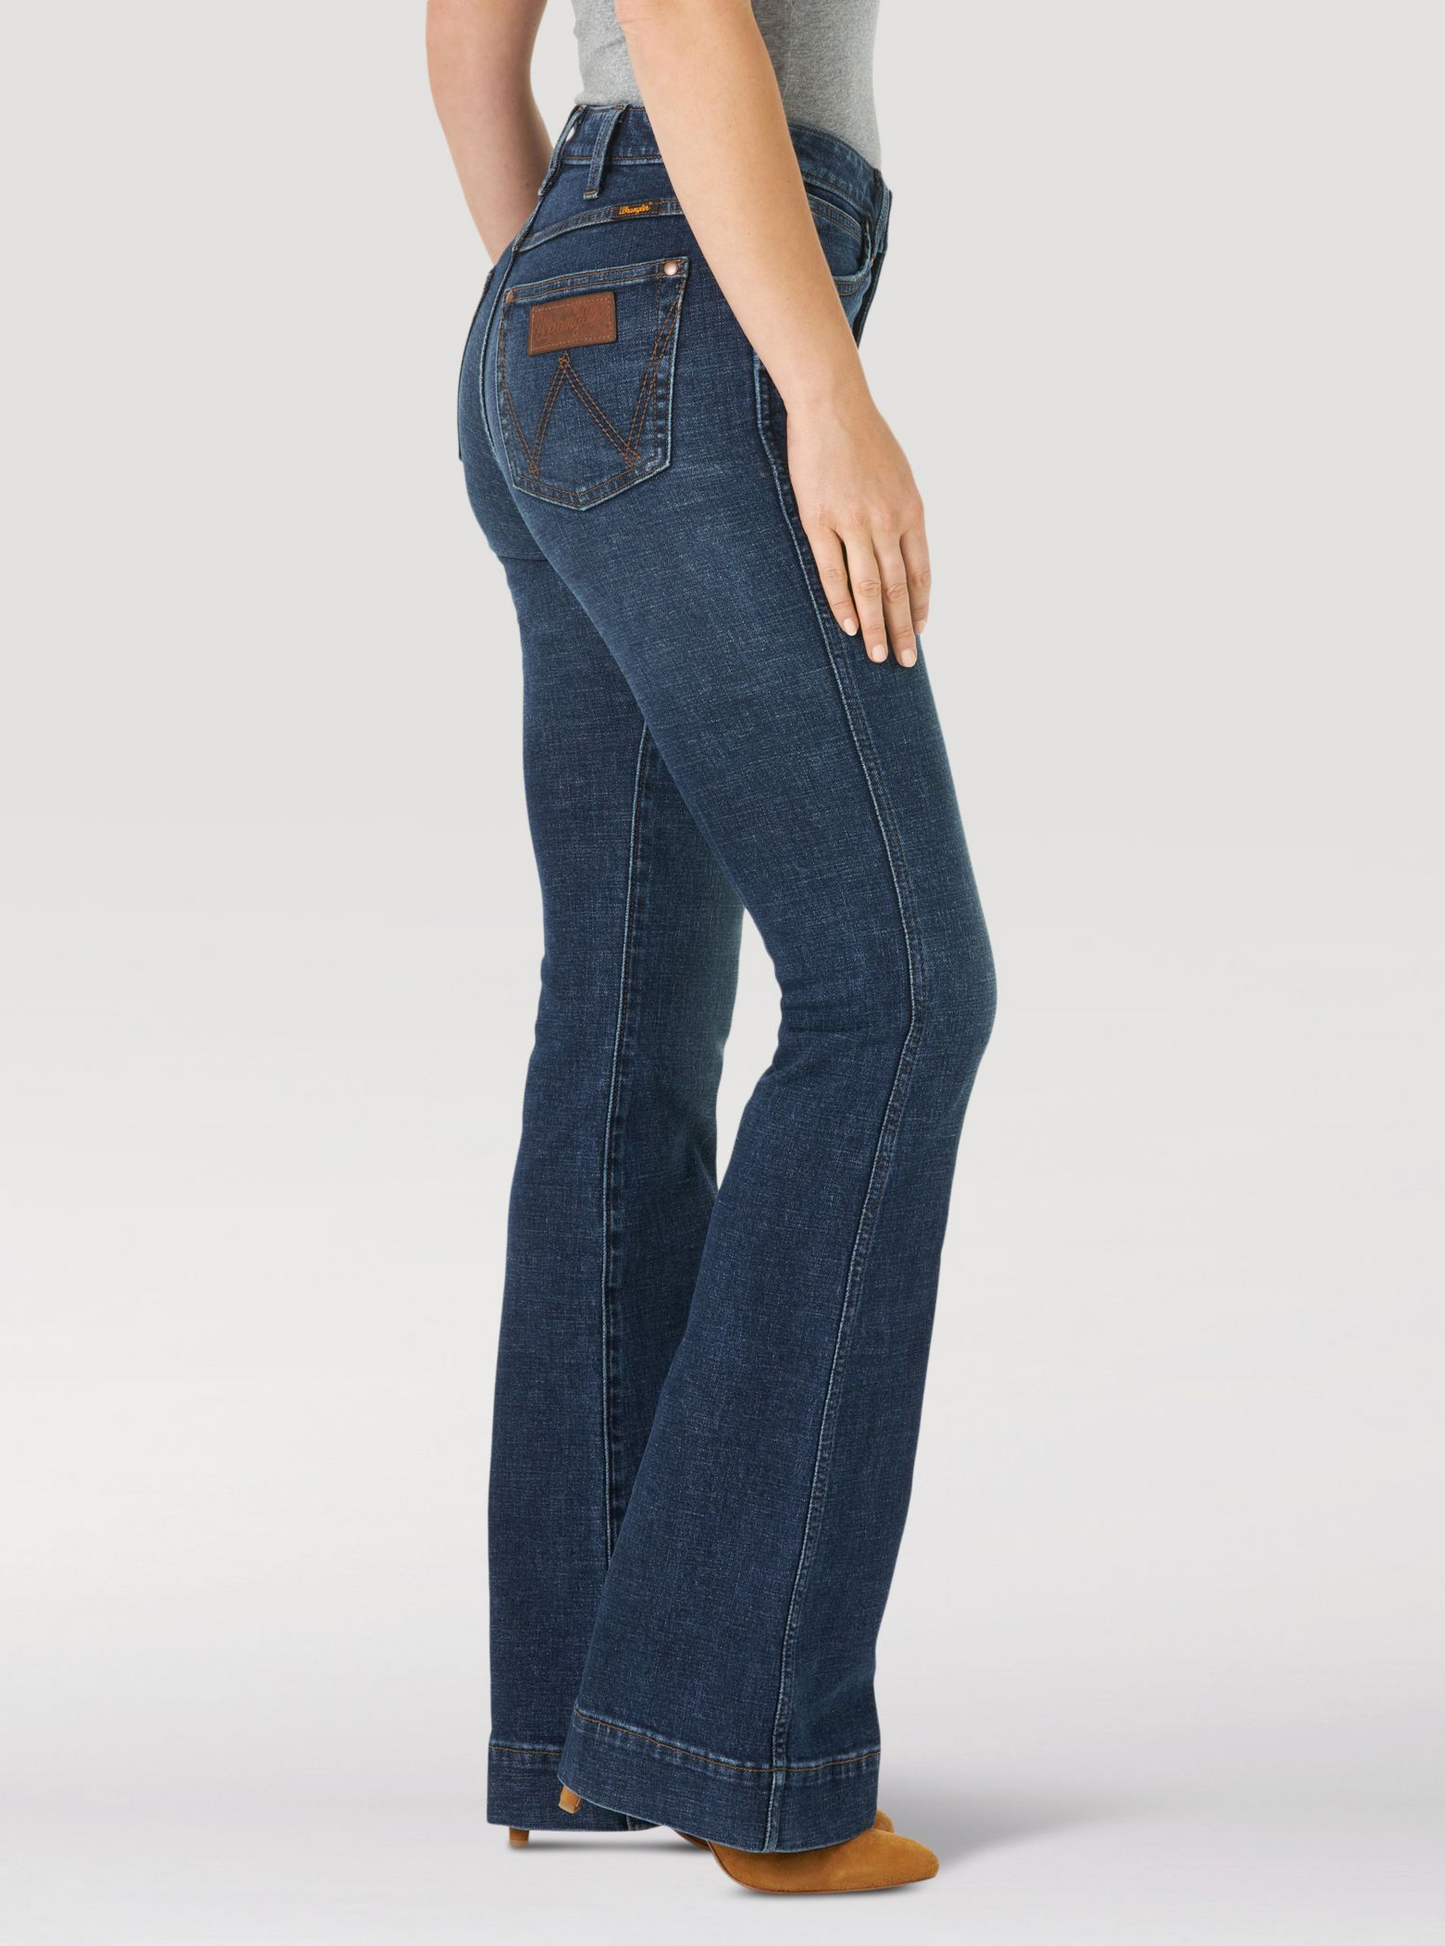 The Wrangler Retro Green Jean: Women's High Rise Trouser In Sara